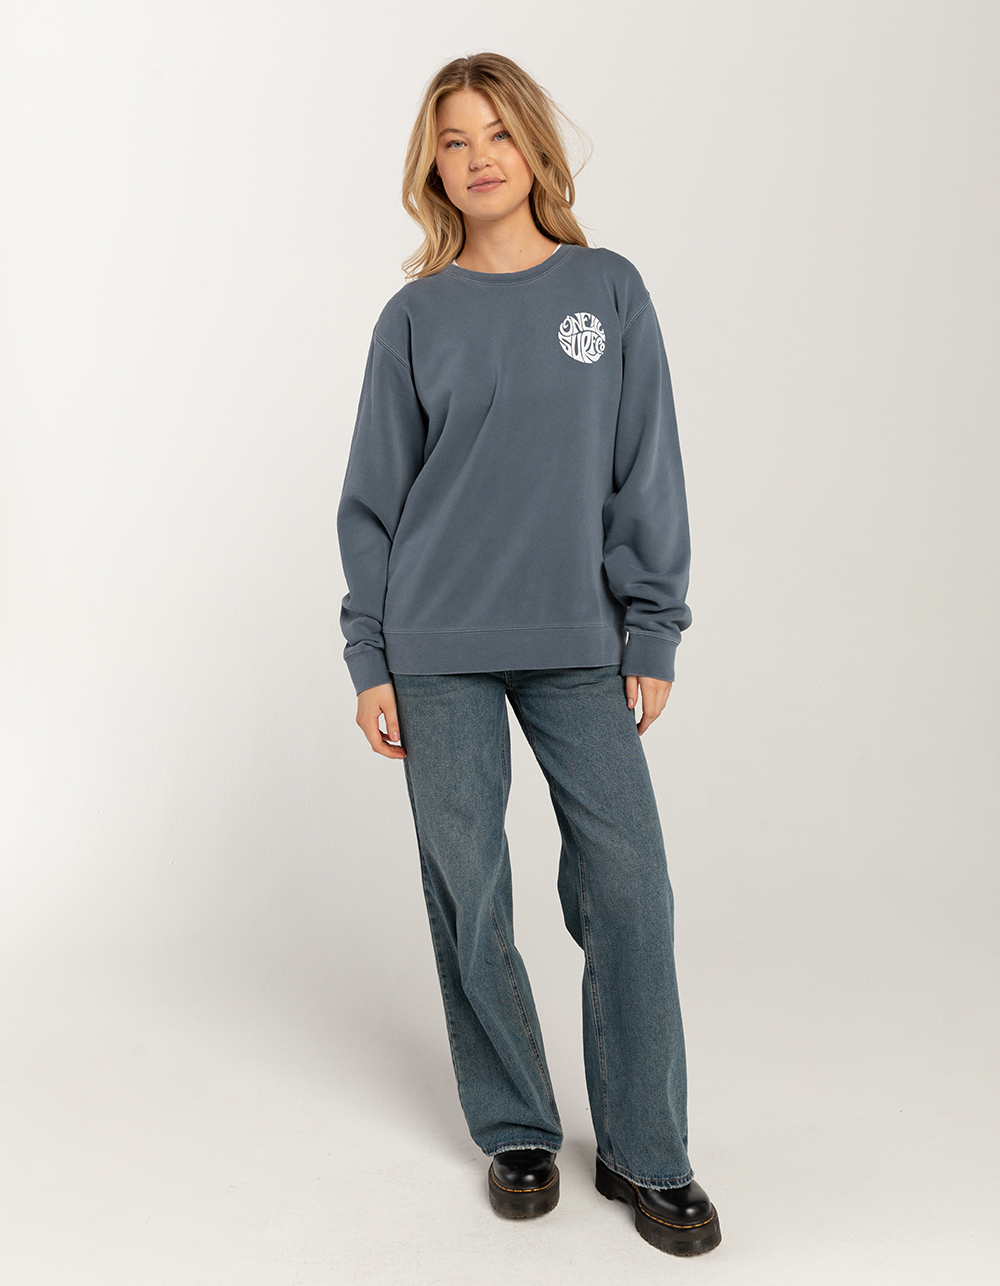 Zelos Activewear Womens Sweatshirt Size Medium Gray Slouchy Pockets  Thumbholes - $18 - From Katie